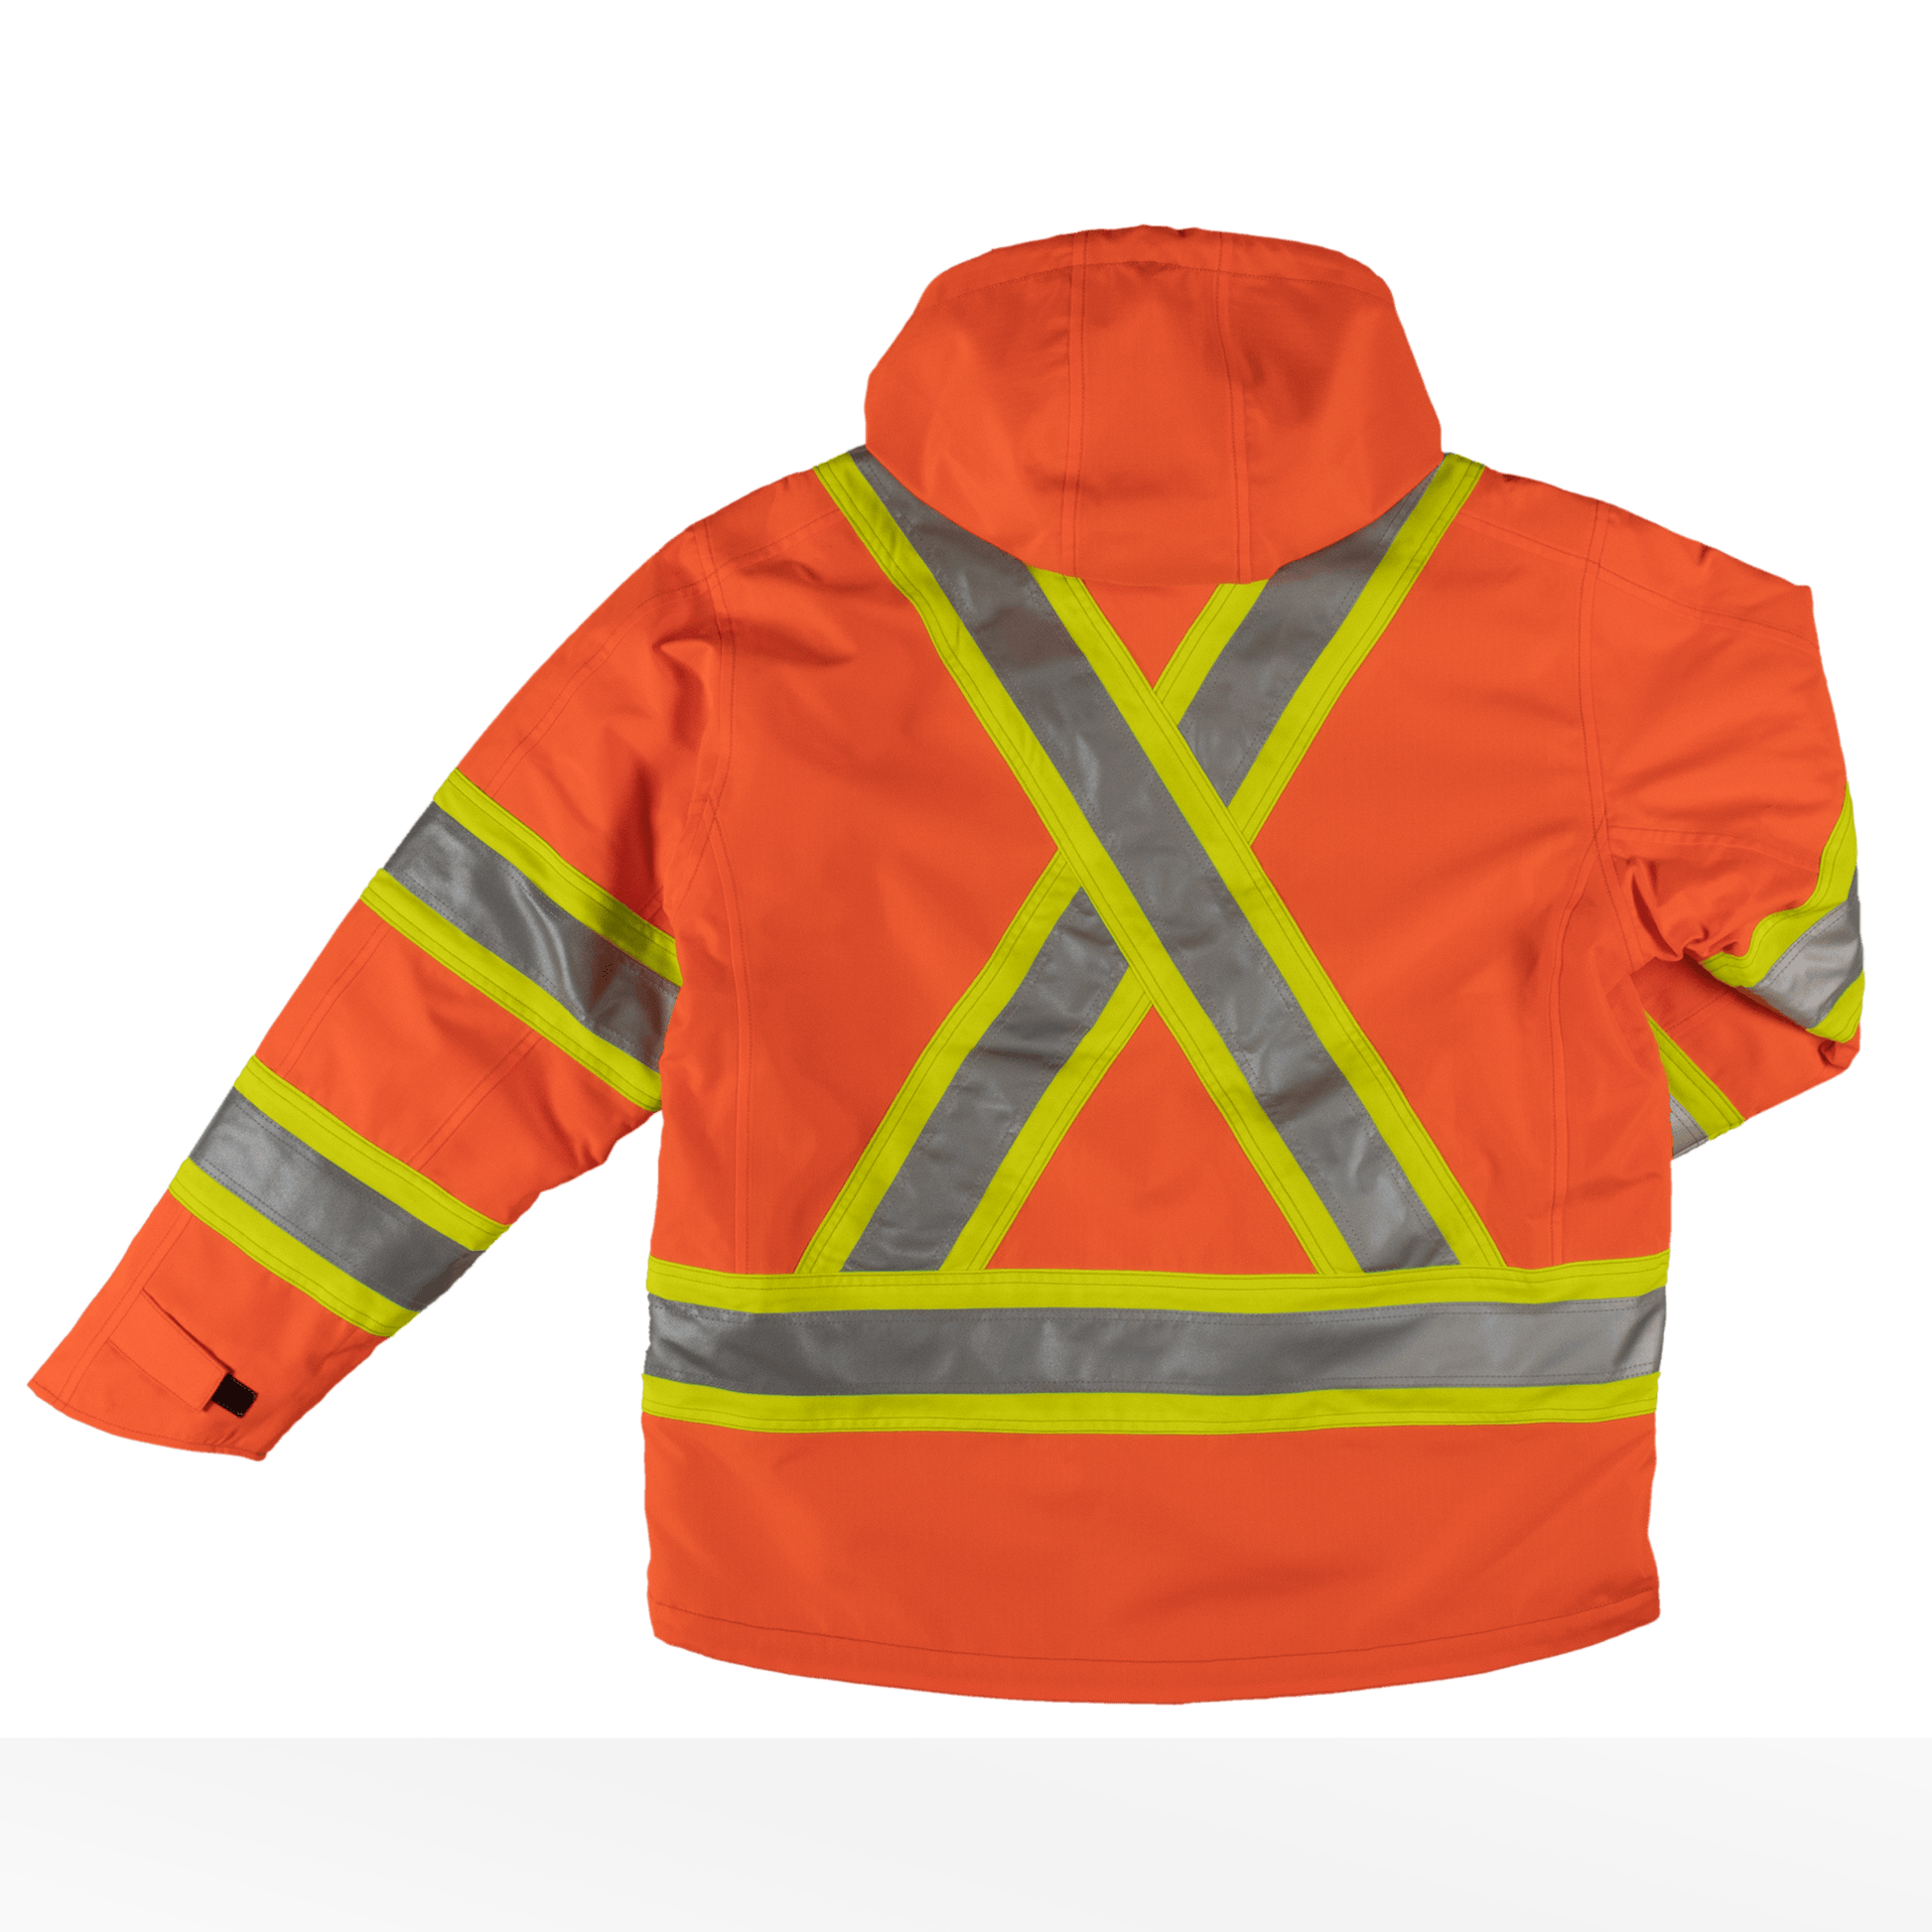 Tough Duck Fleece Lined Safety Jacket - S245 - Solid Orange - back